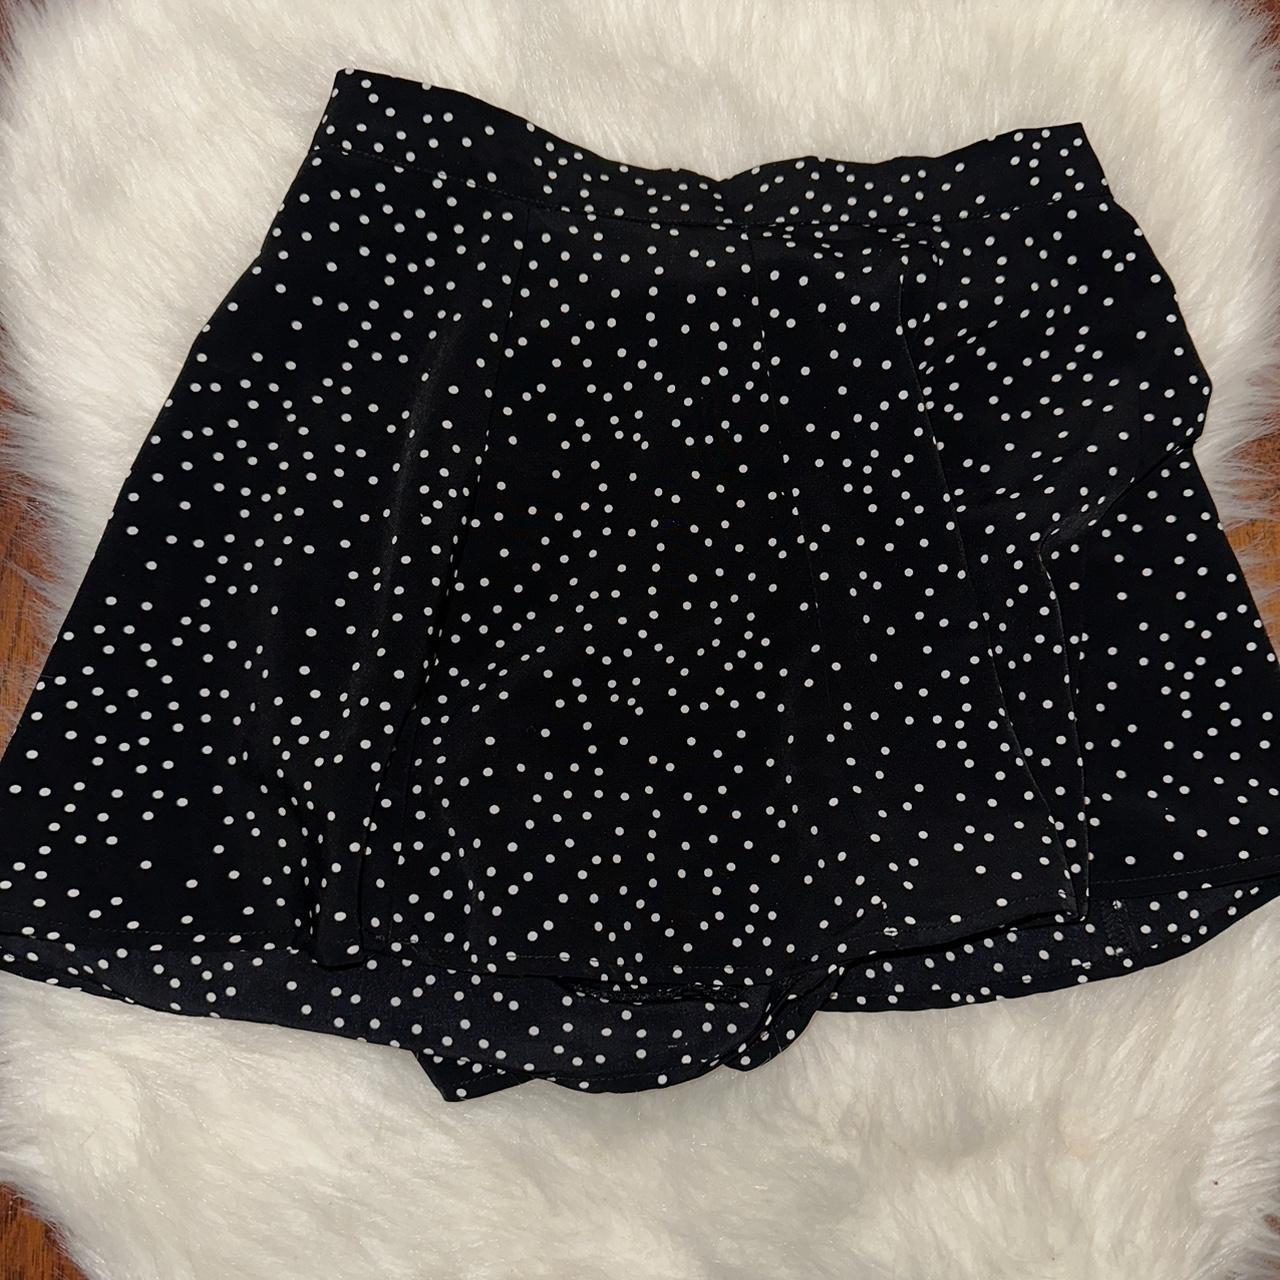 Polka dot skirt with built in shorts - Depop